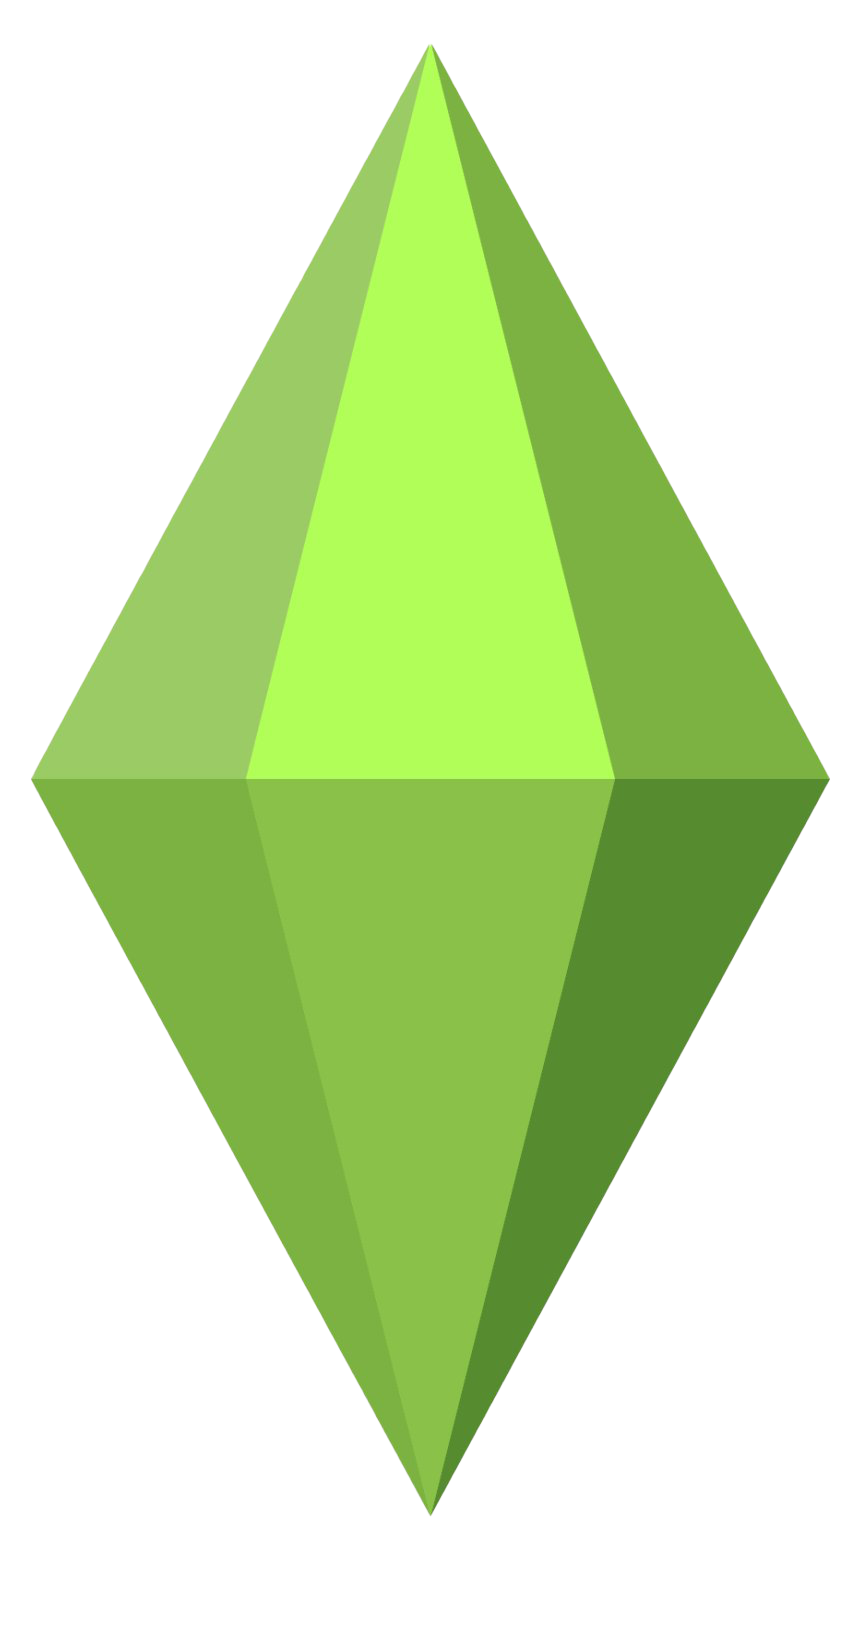 The Sims Diamond PNG Photos